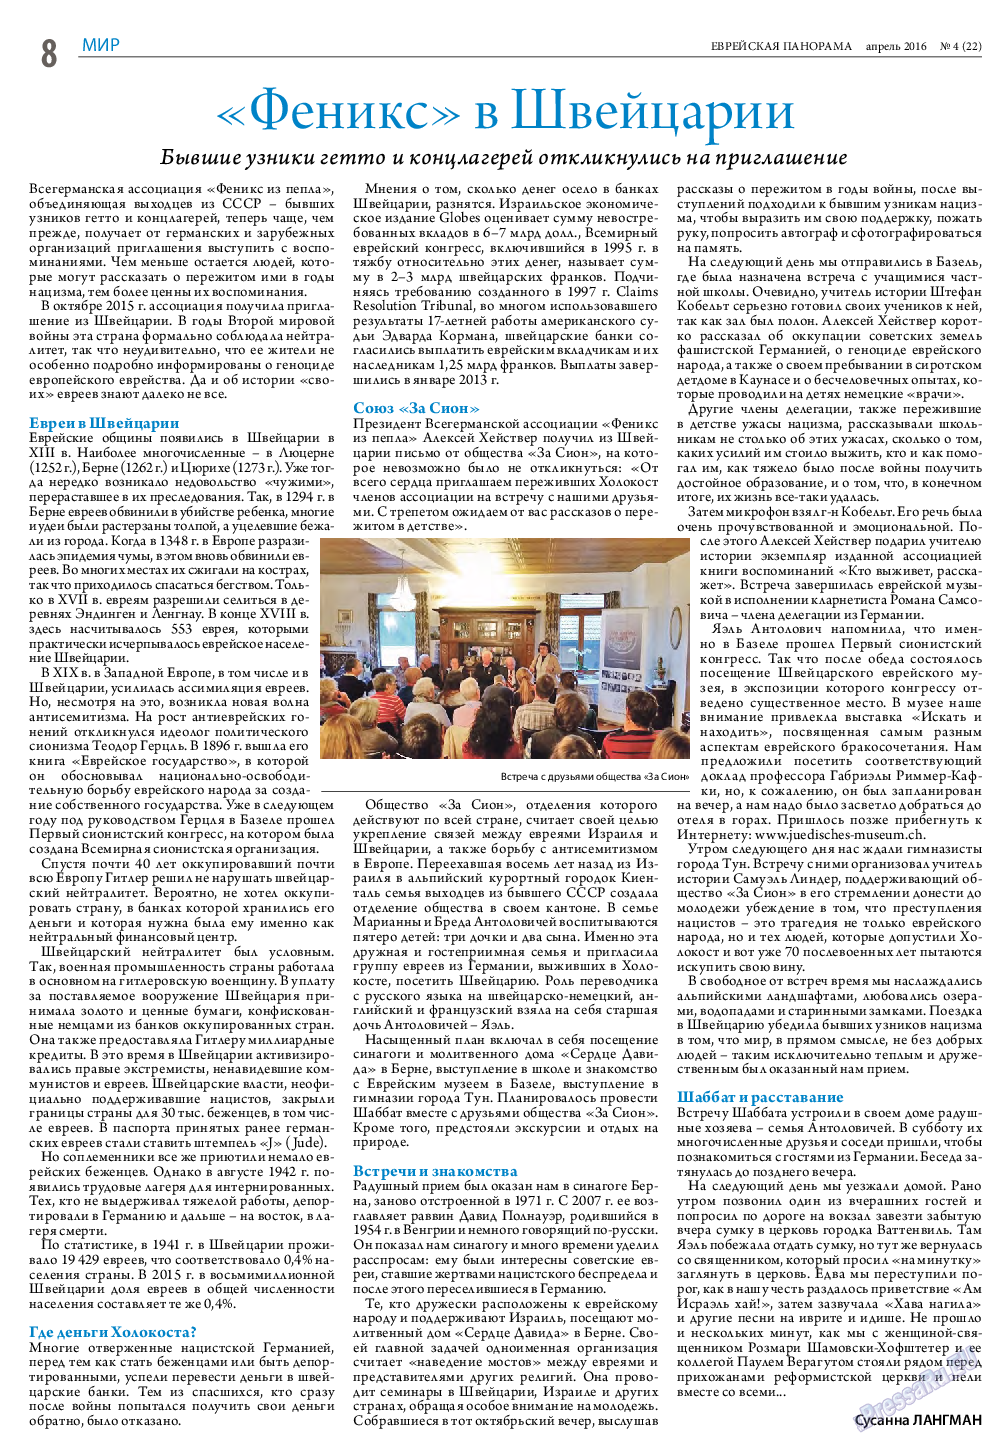 Еврейская панорама, газета. 2016 №4 стр.8